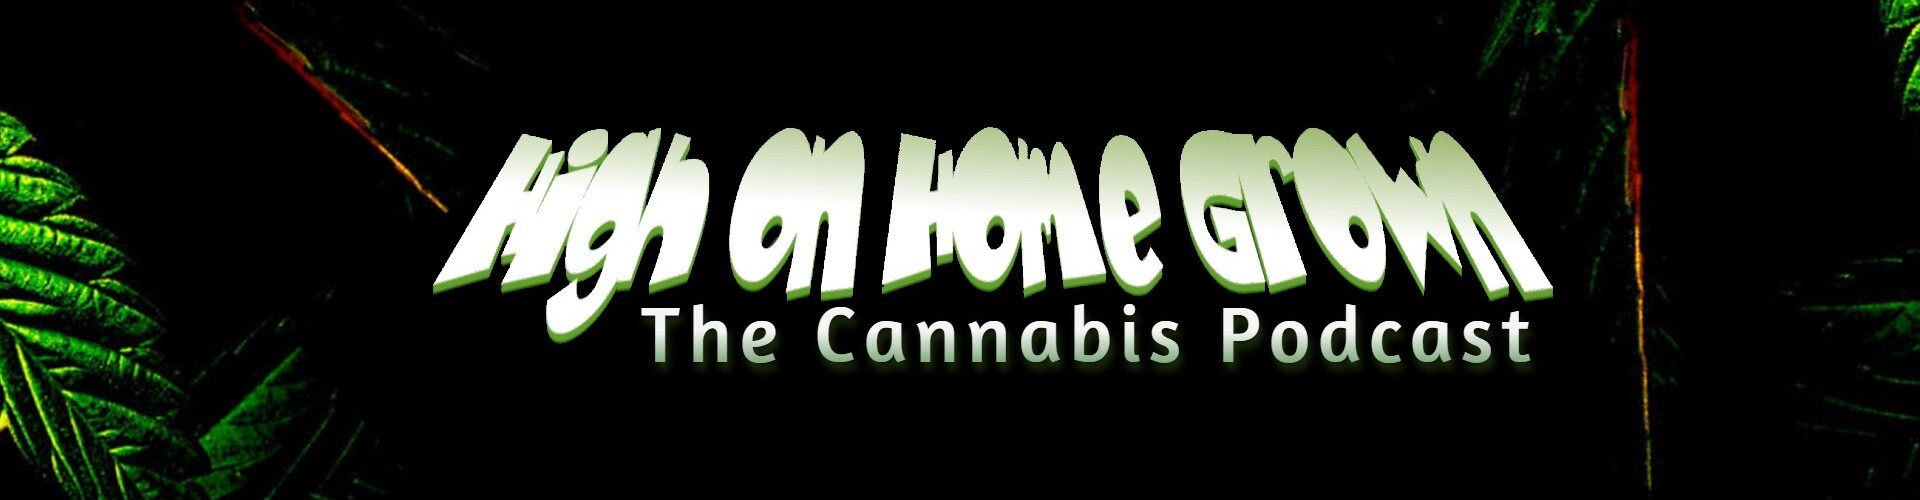 High on Home Grown, The Cannabis Podcast